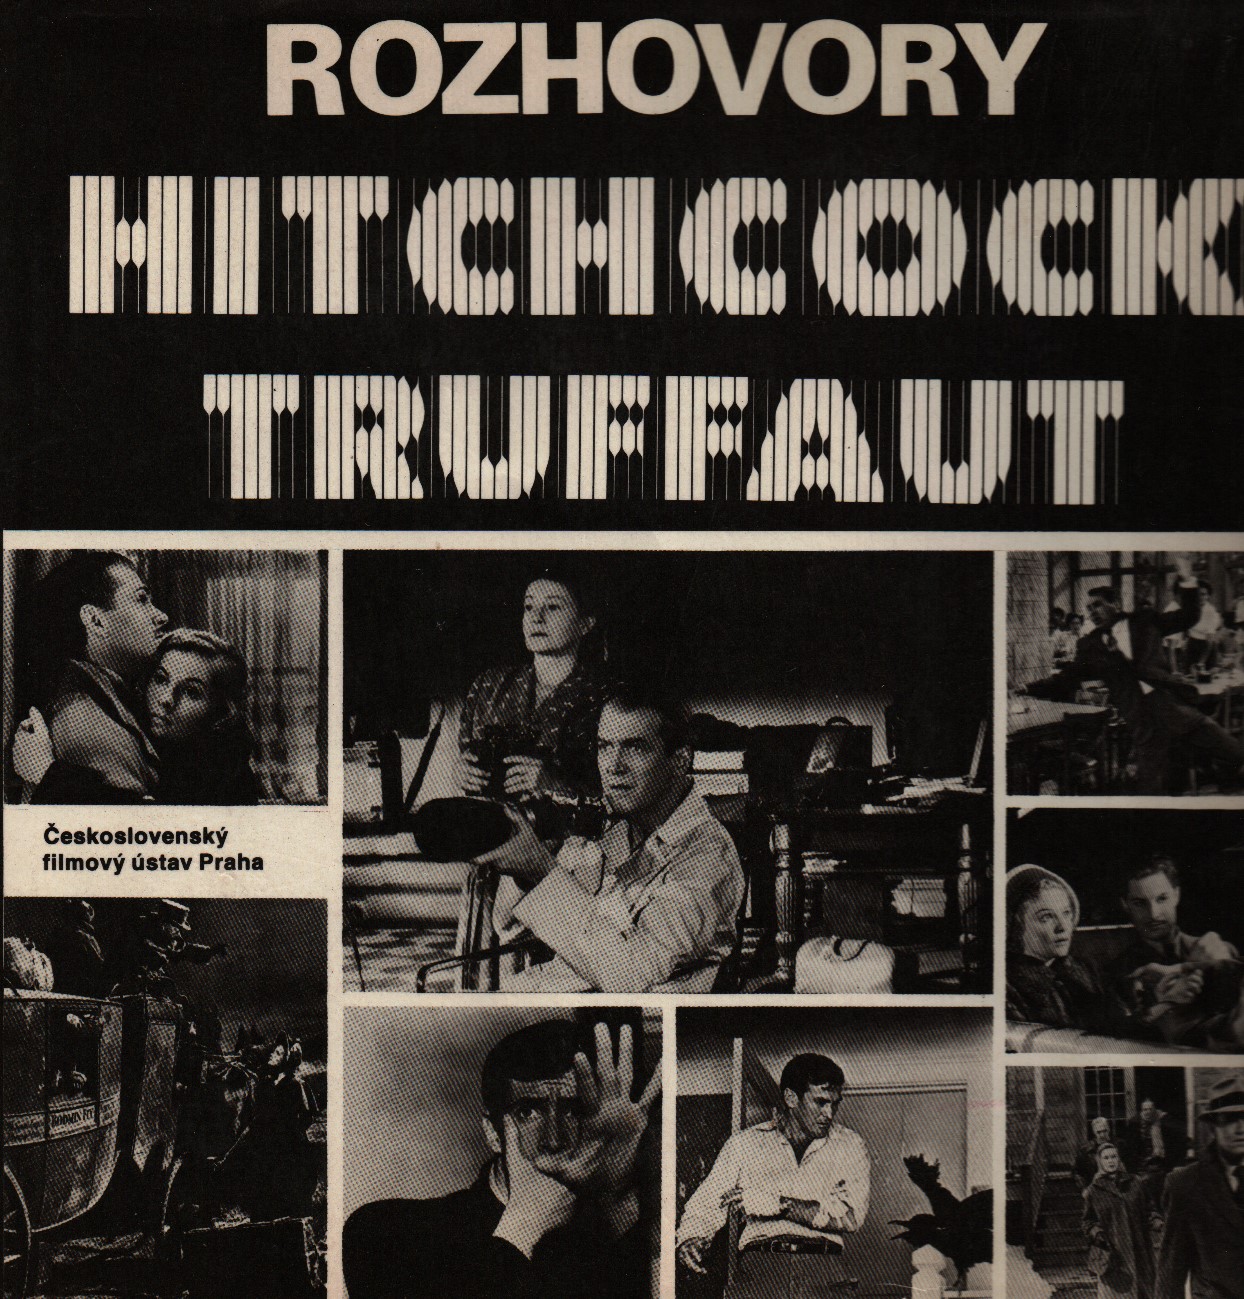 Rozhovory Hitchcock - Truffaut